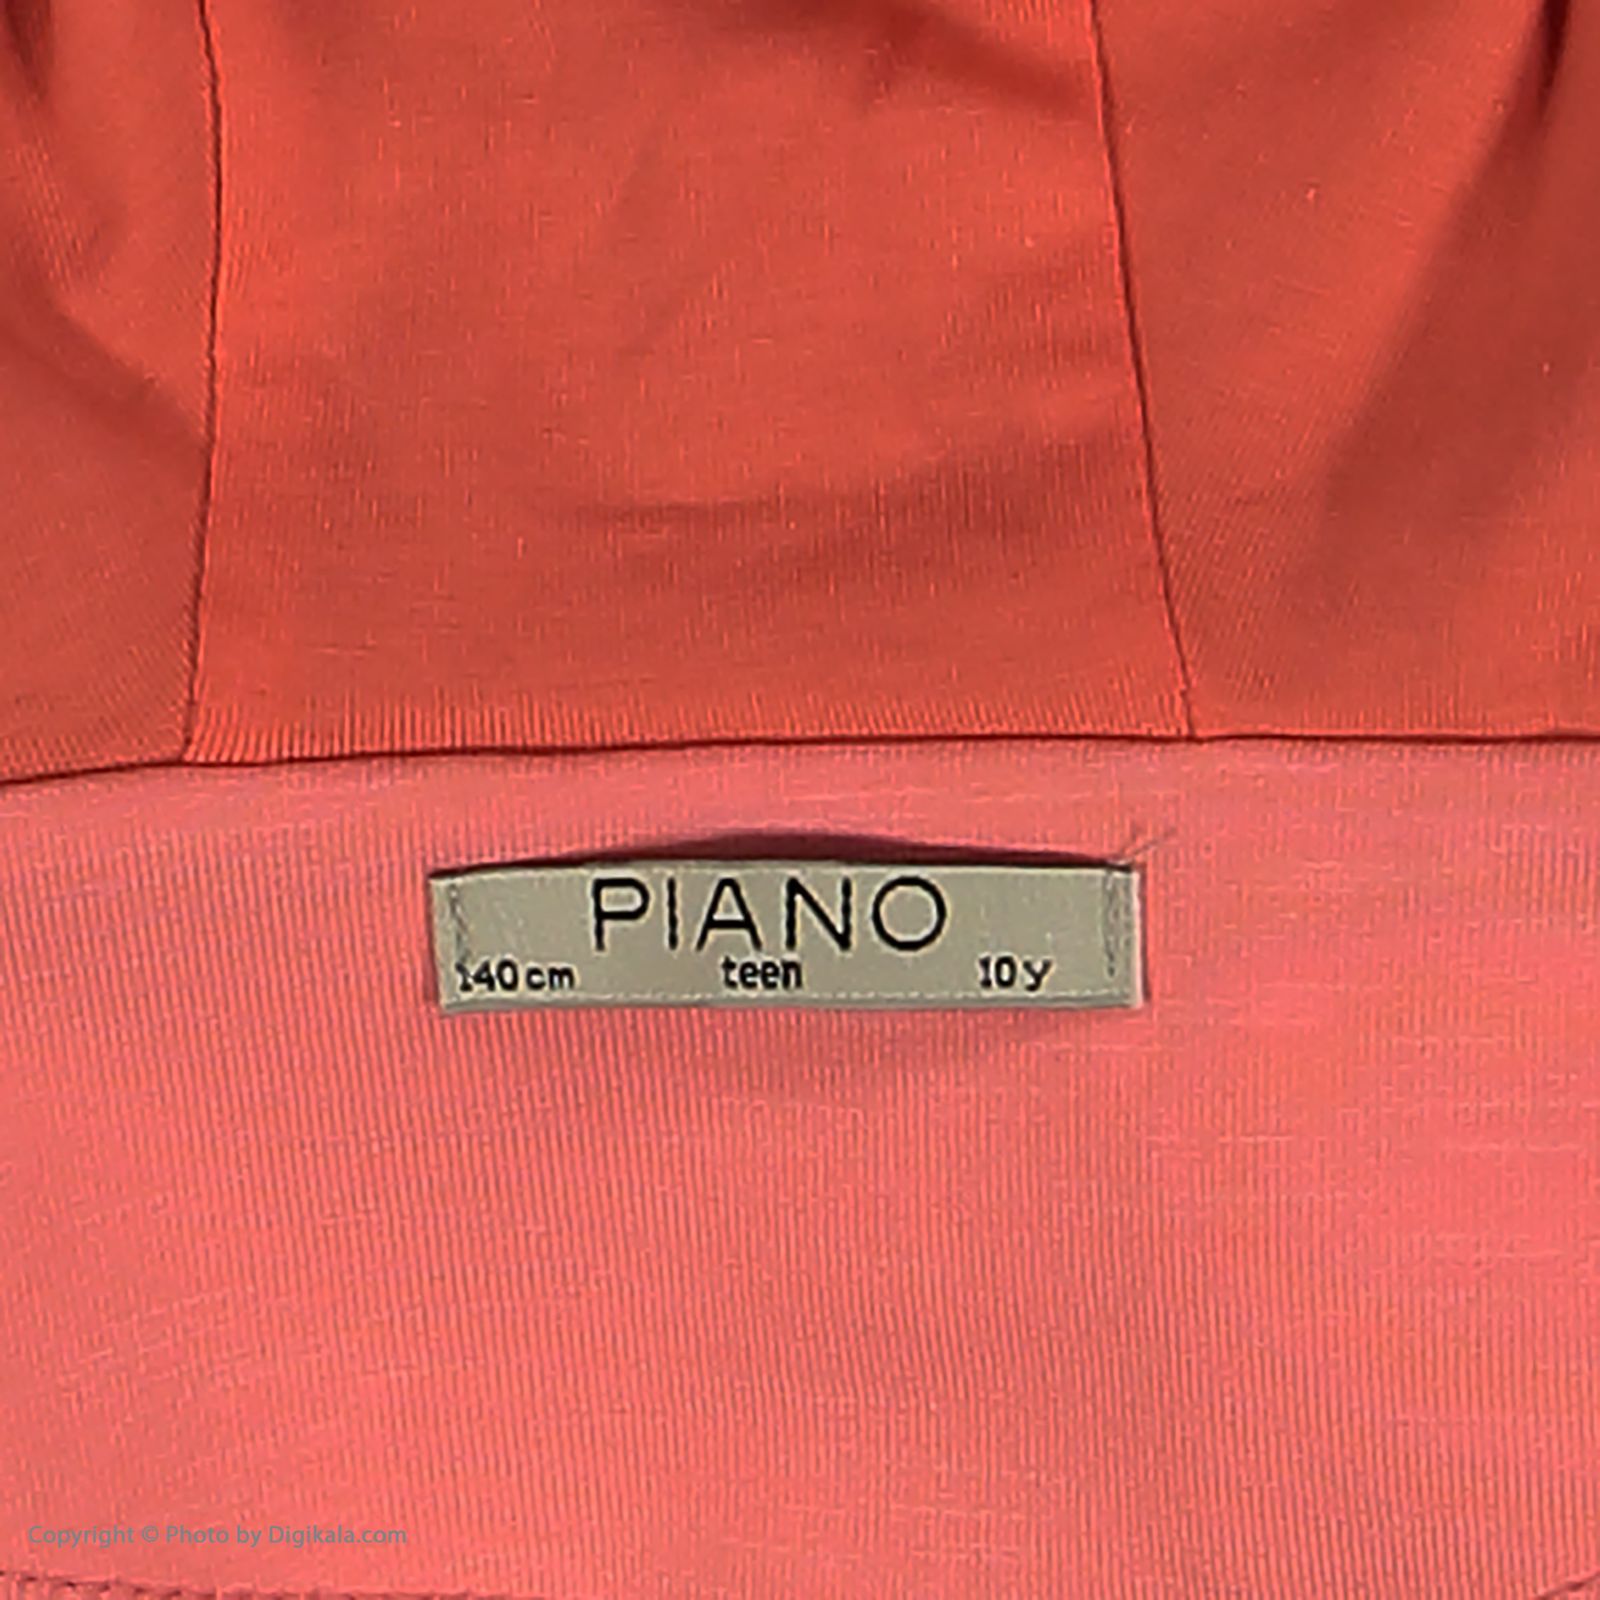 سویشرت دخترانه پیانو مدل 1009009901618-22 -  - 5